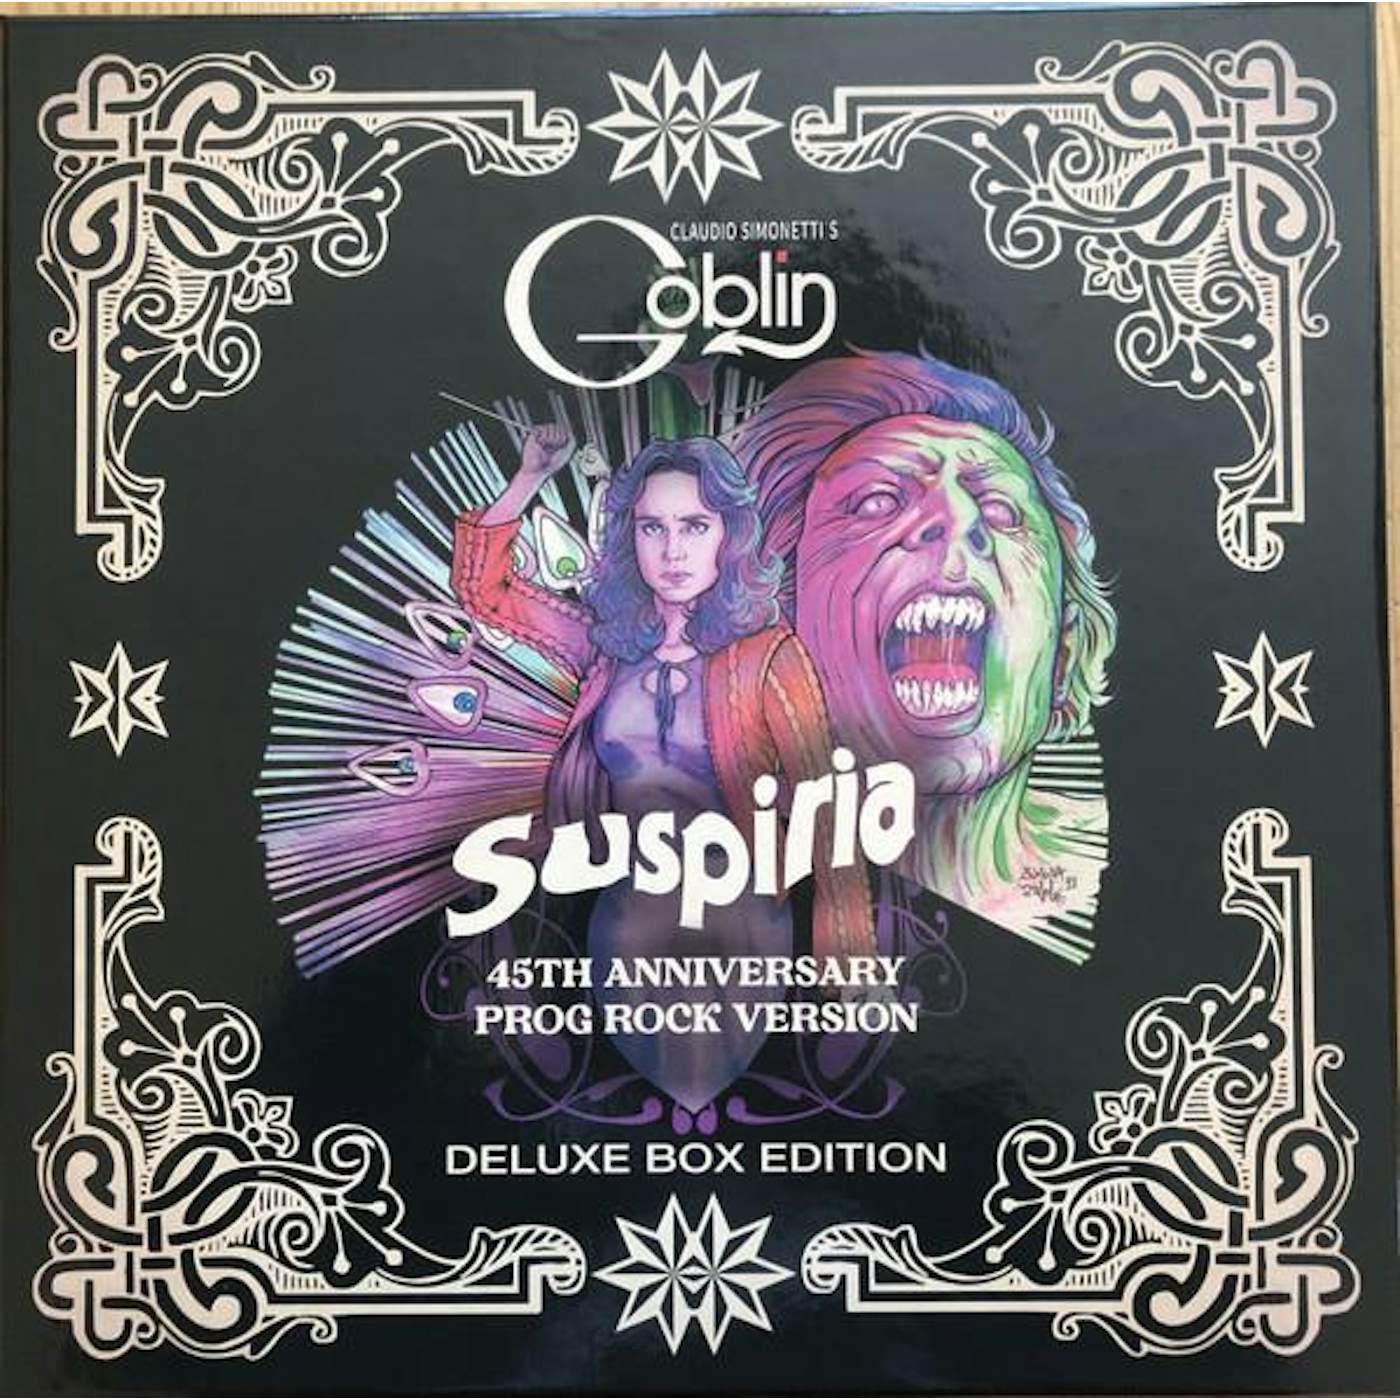 Claudio Simonetti's Goblin SUSPIRIA Original Soundtrack (45TH ANNIVERSARY PROG ROCK VERSION DELUXE VINYL/2LP) Vinyl Record